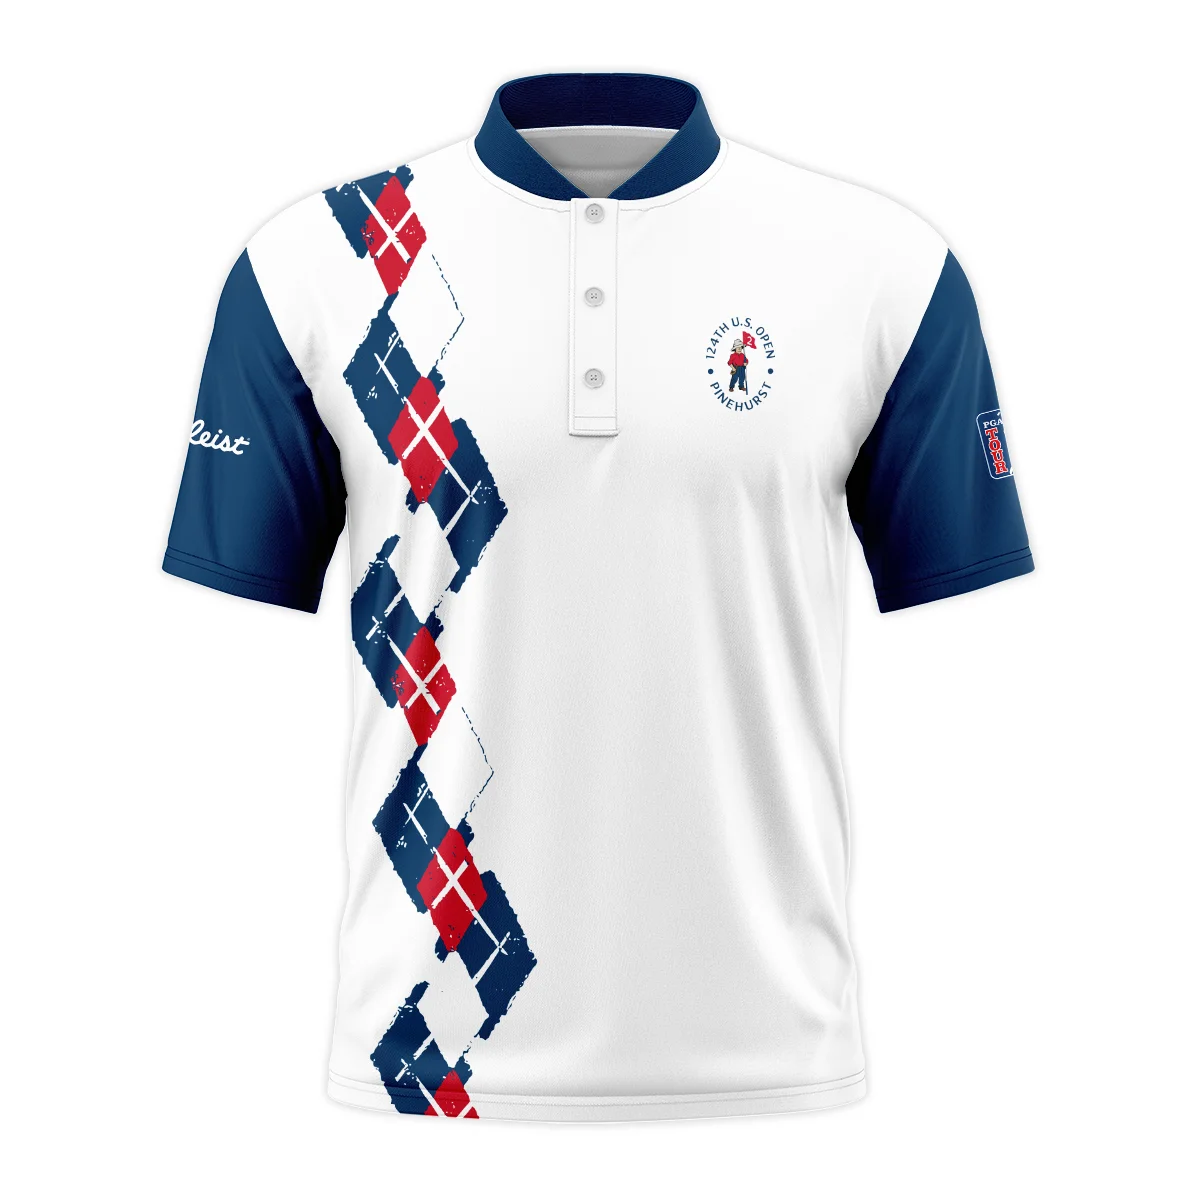 Golf Sport Pattern Blue Mix Color 124th U.S. Open Pinehurst Titlest Long Polo Shirt Style Classic